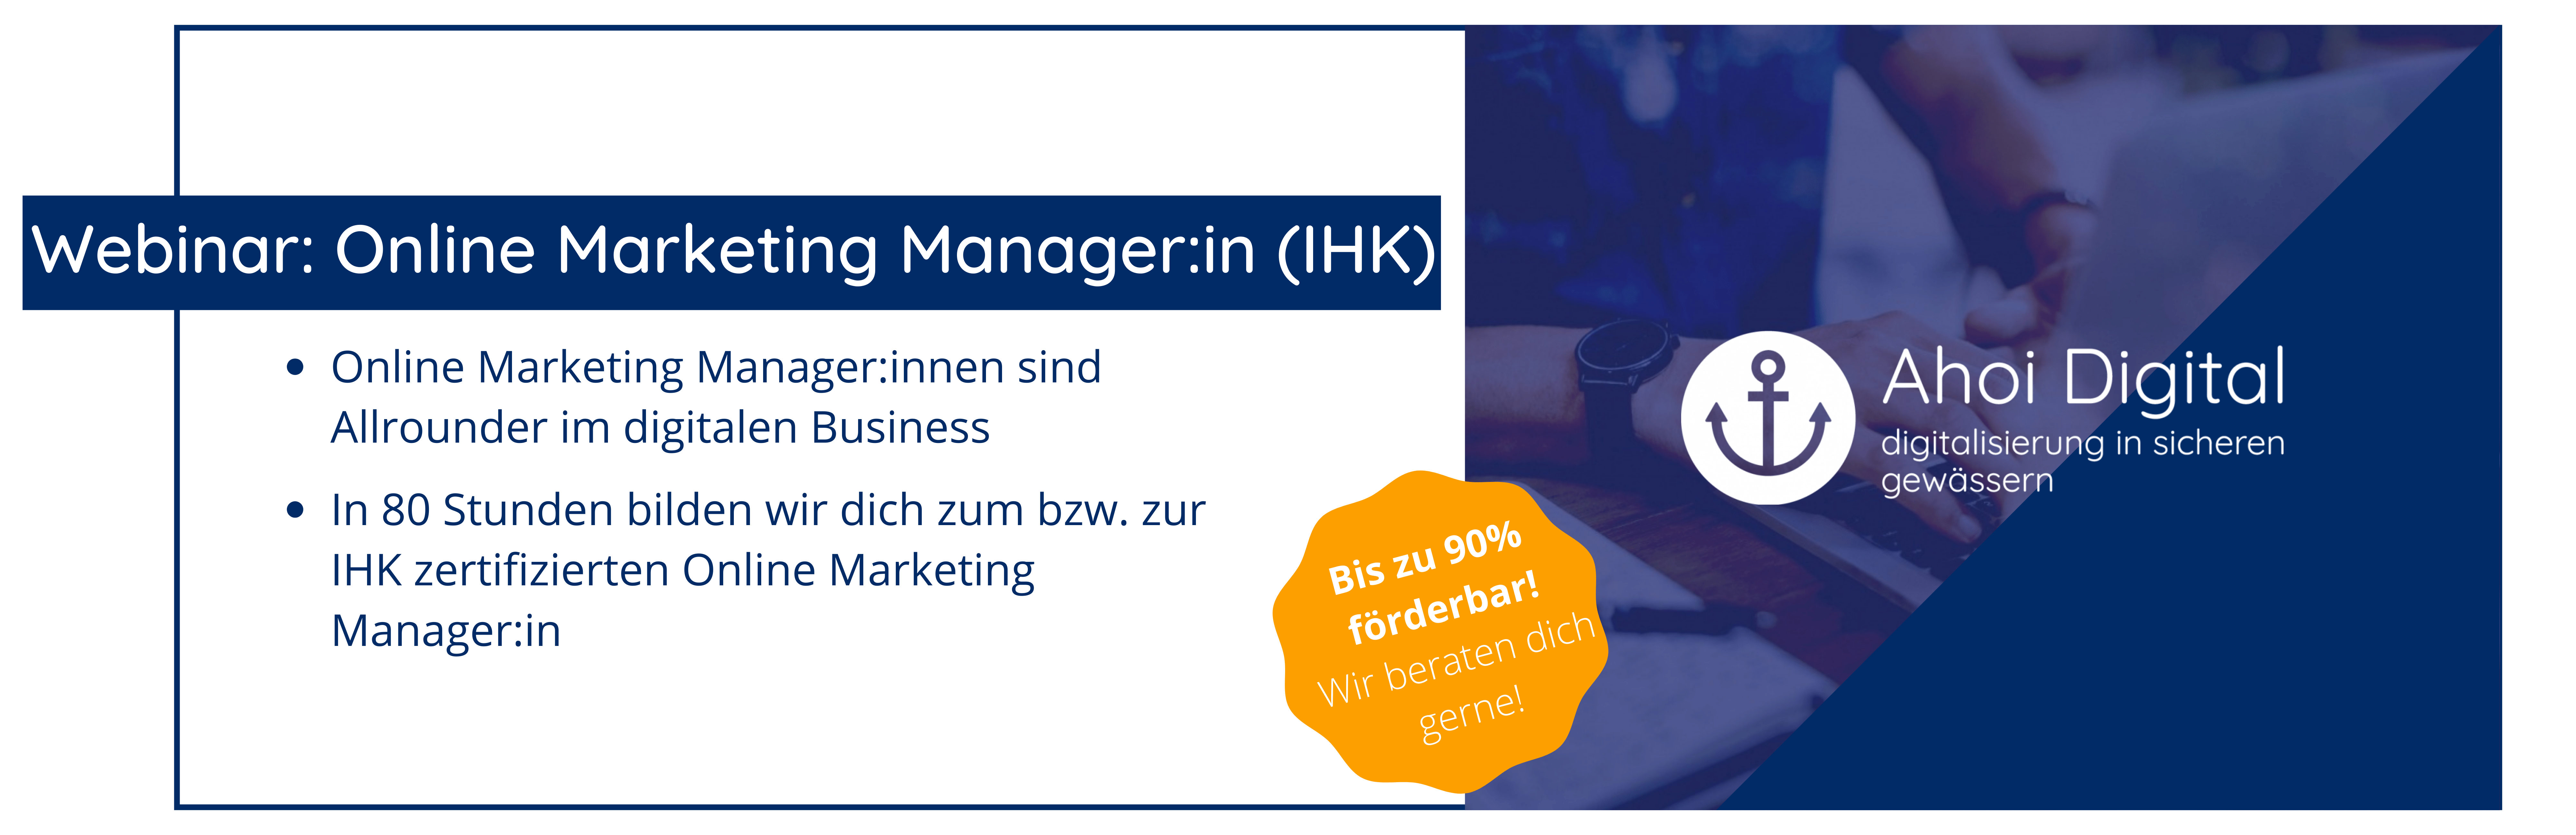 Werde Online Marketing Manager (IHK)! 1 - Social Media Agentur aus Oldenburg Social Media Agentur aus Oldenburg